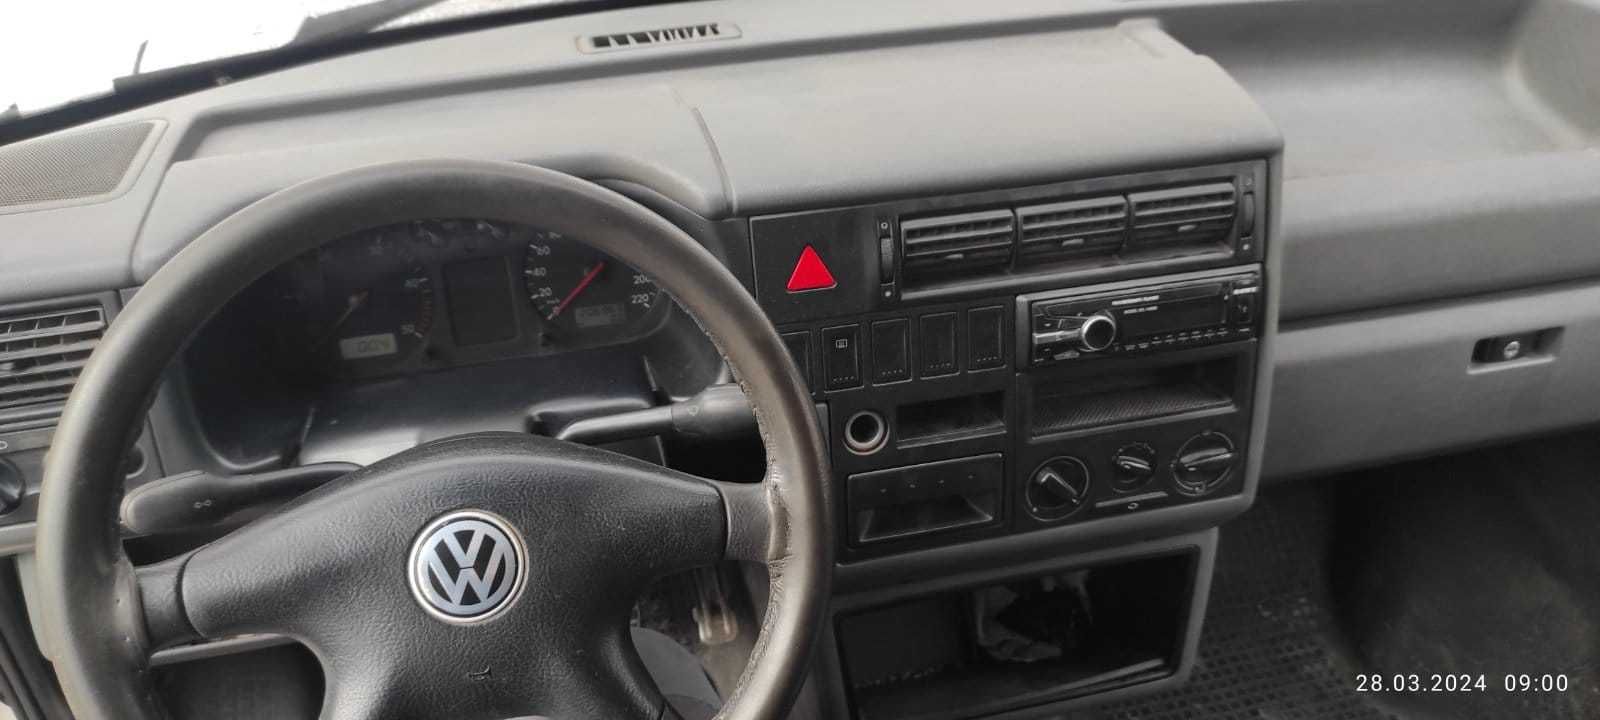 Продам Volkswagen T4 1.9 dt груз